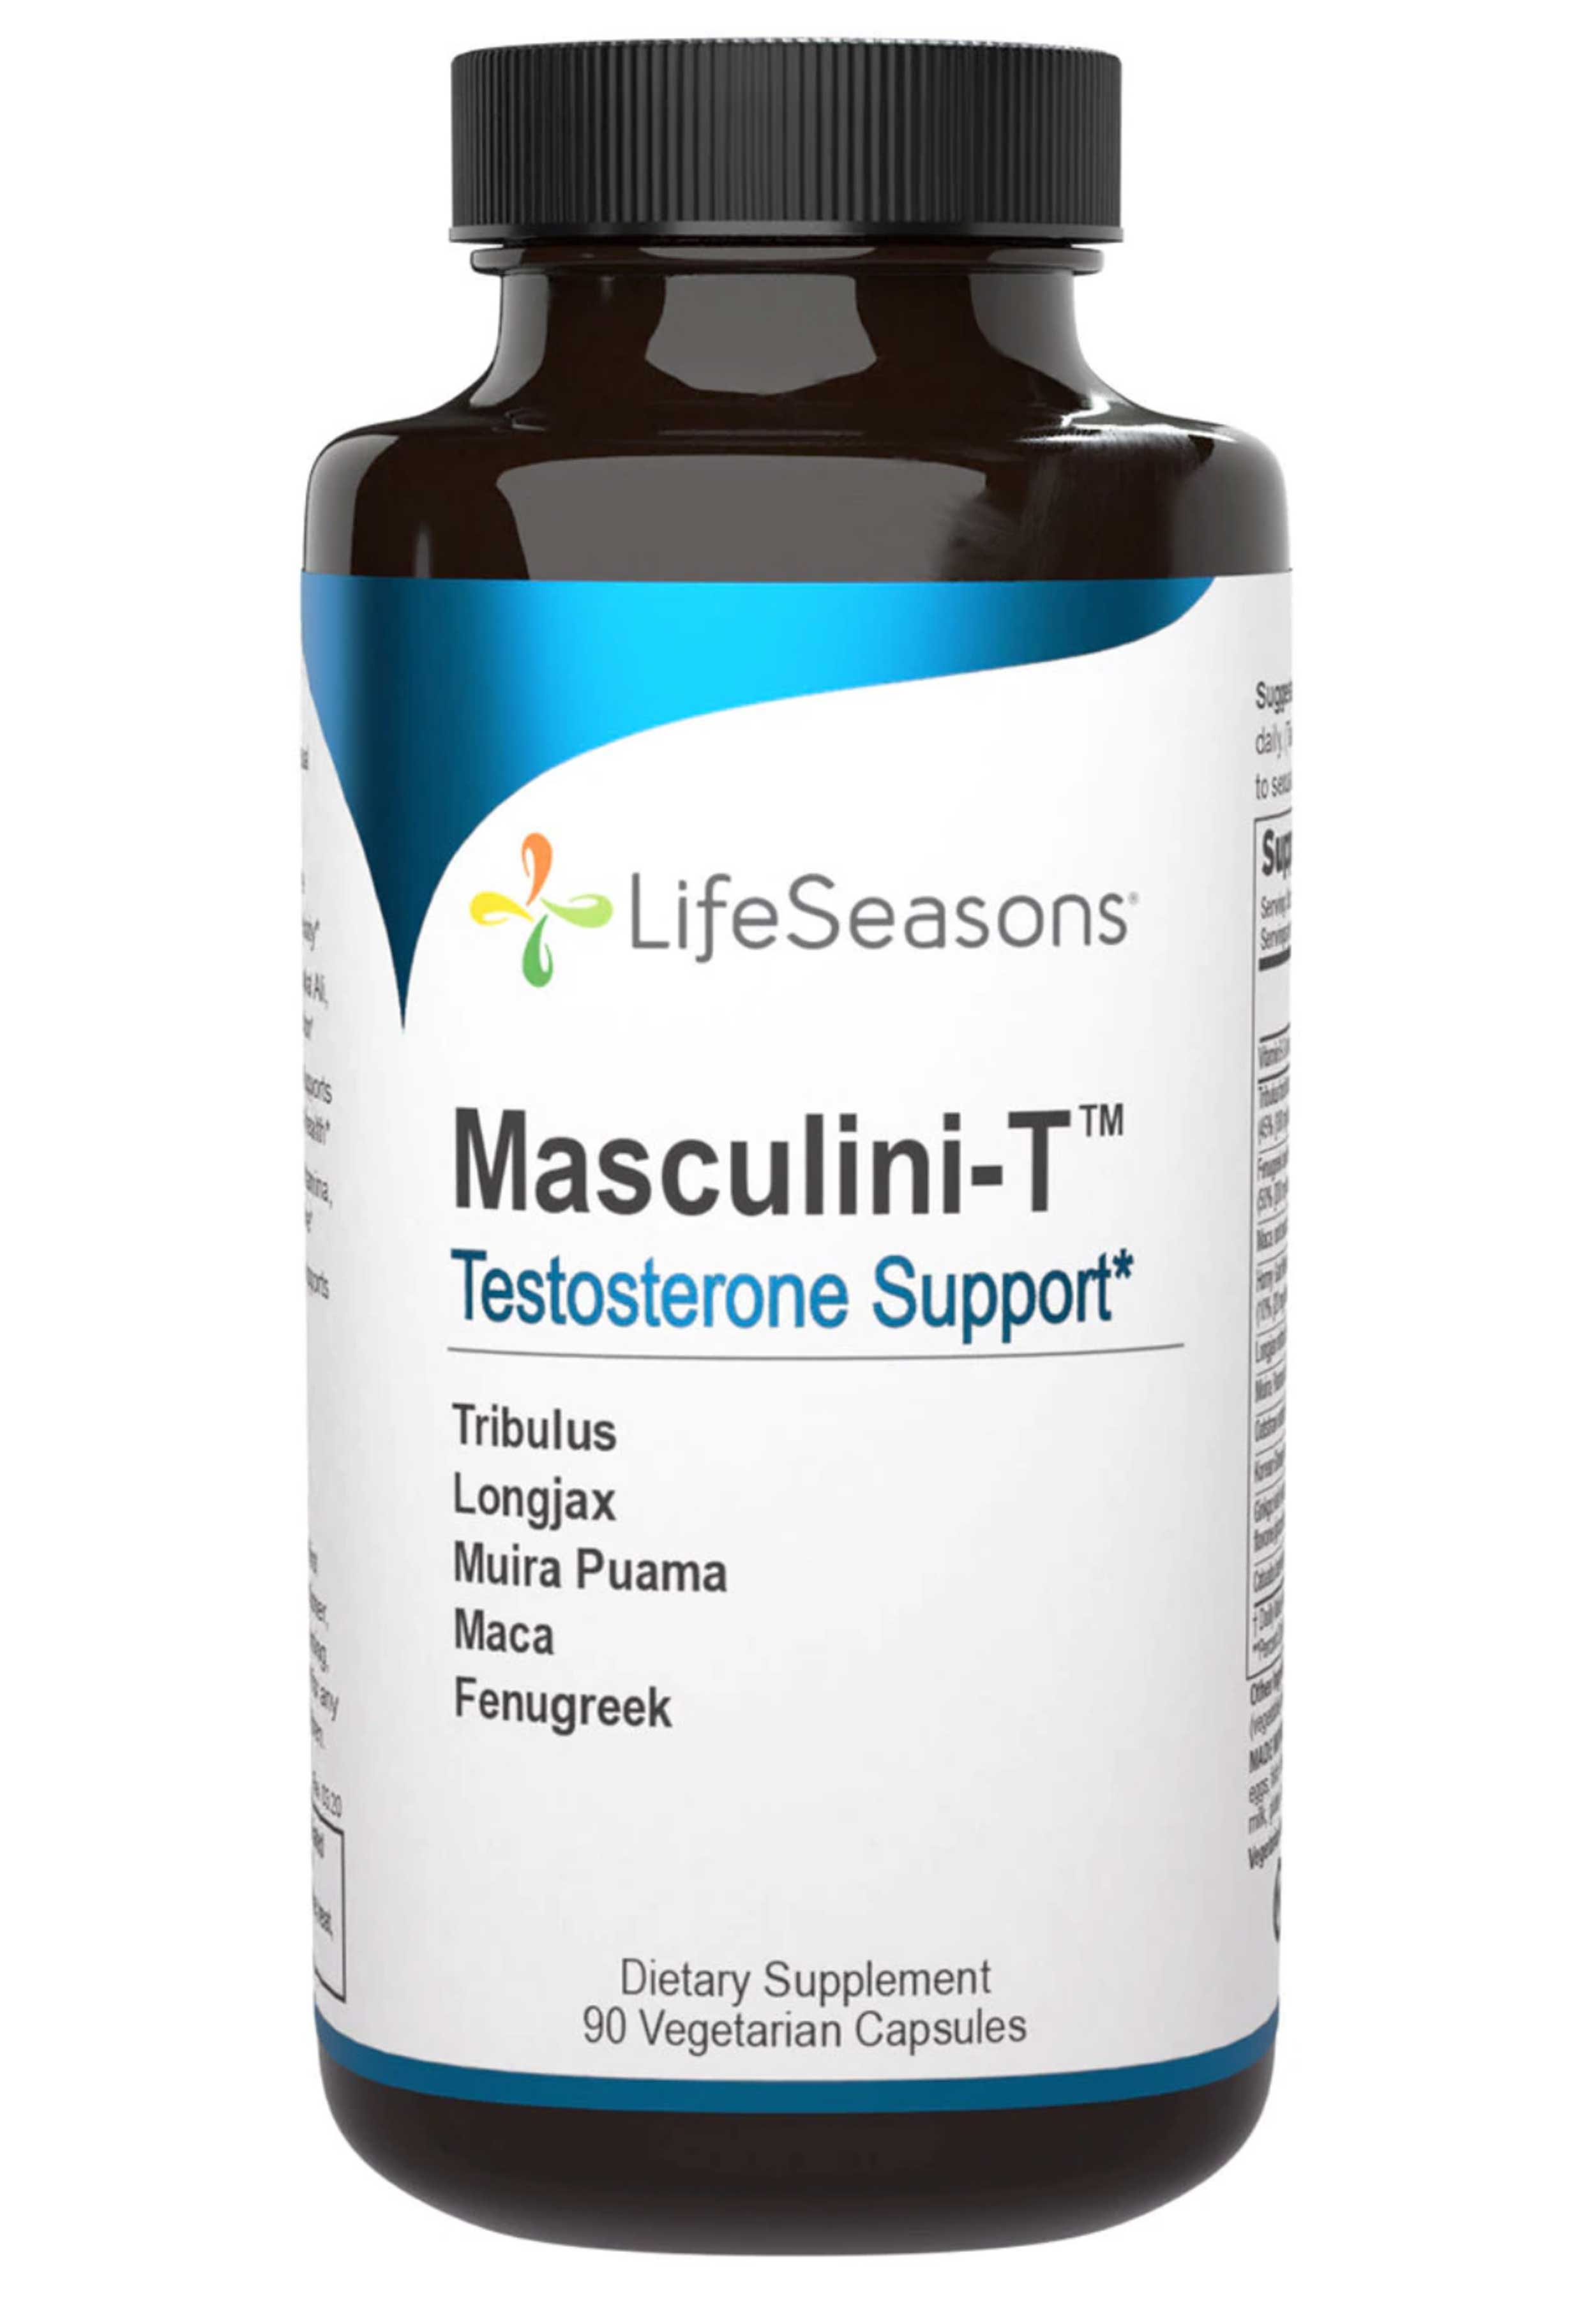 LifeSeasons Masculini-T